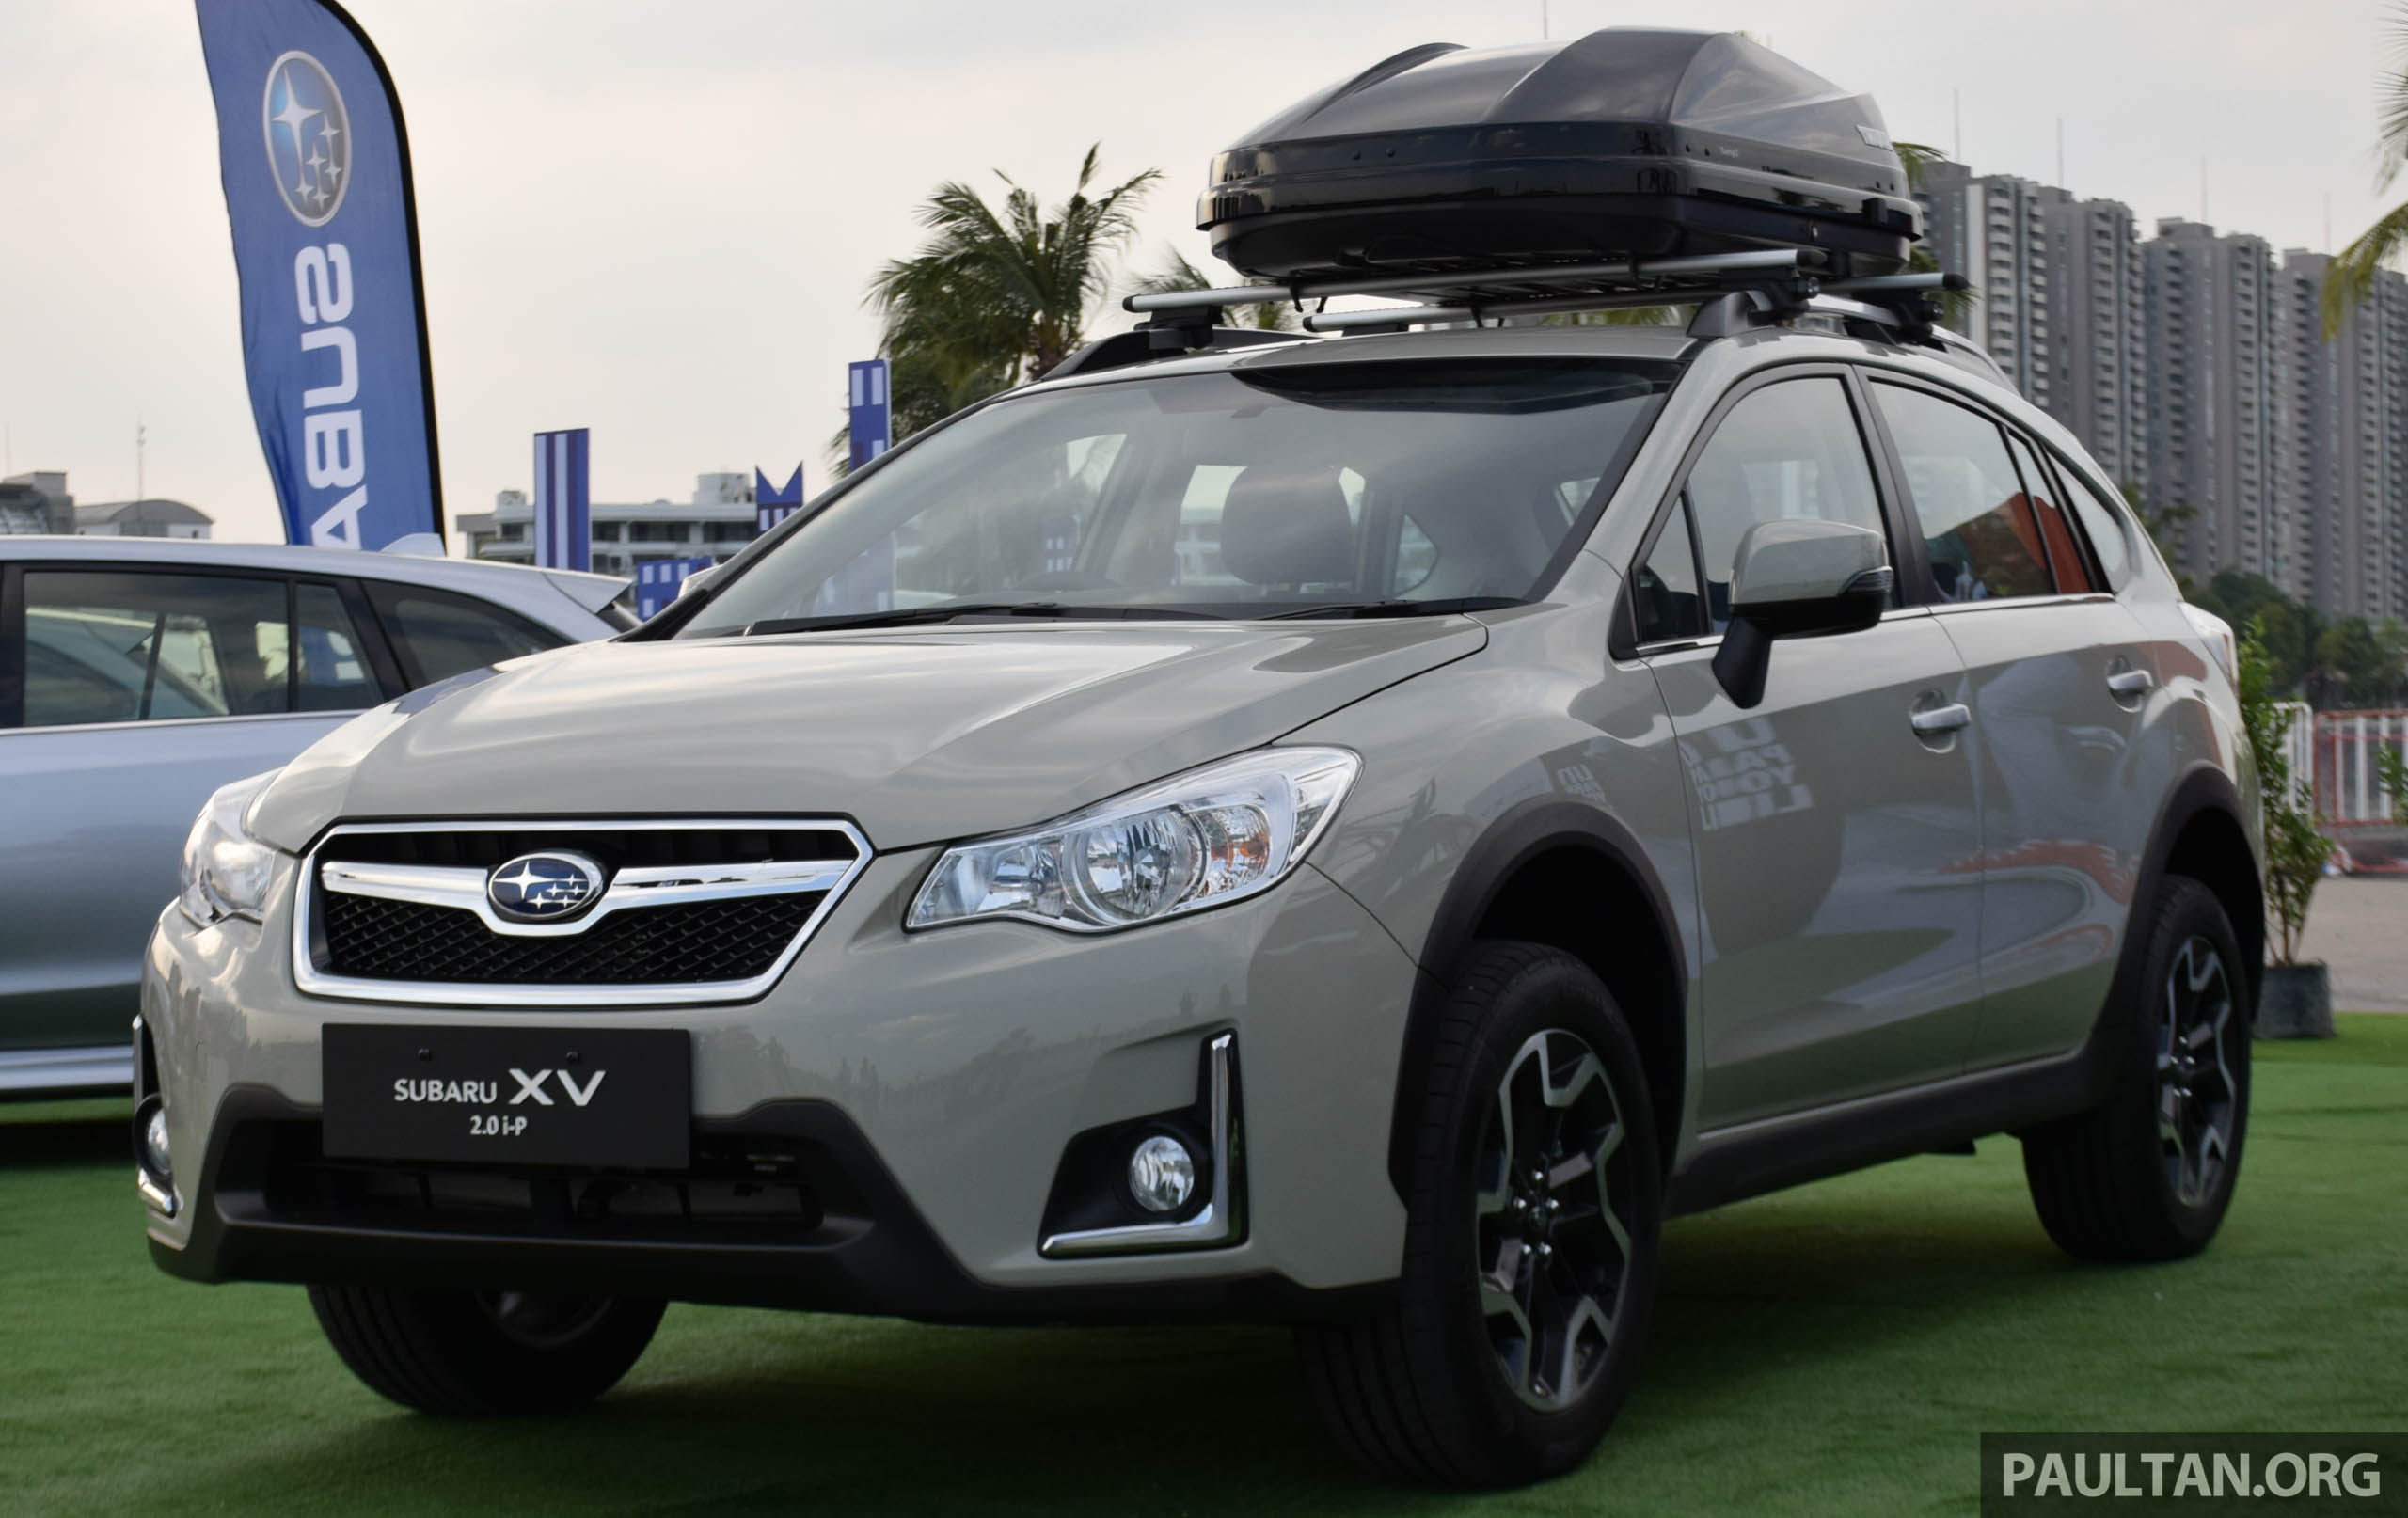 2016_Subaru_XV_Thailand-12 - Paul Tan's Automotive News